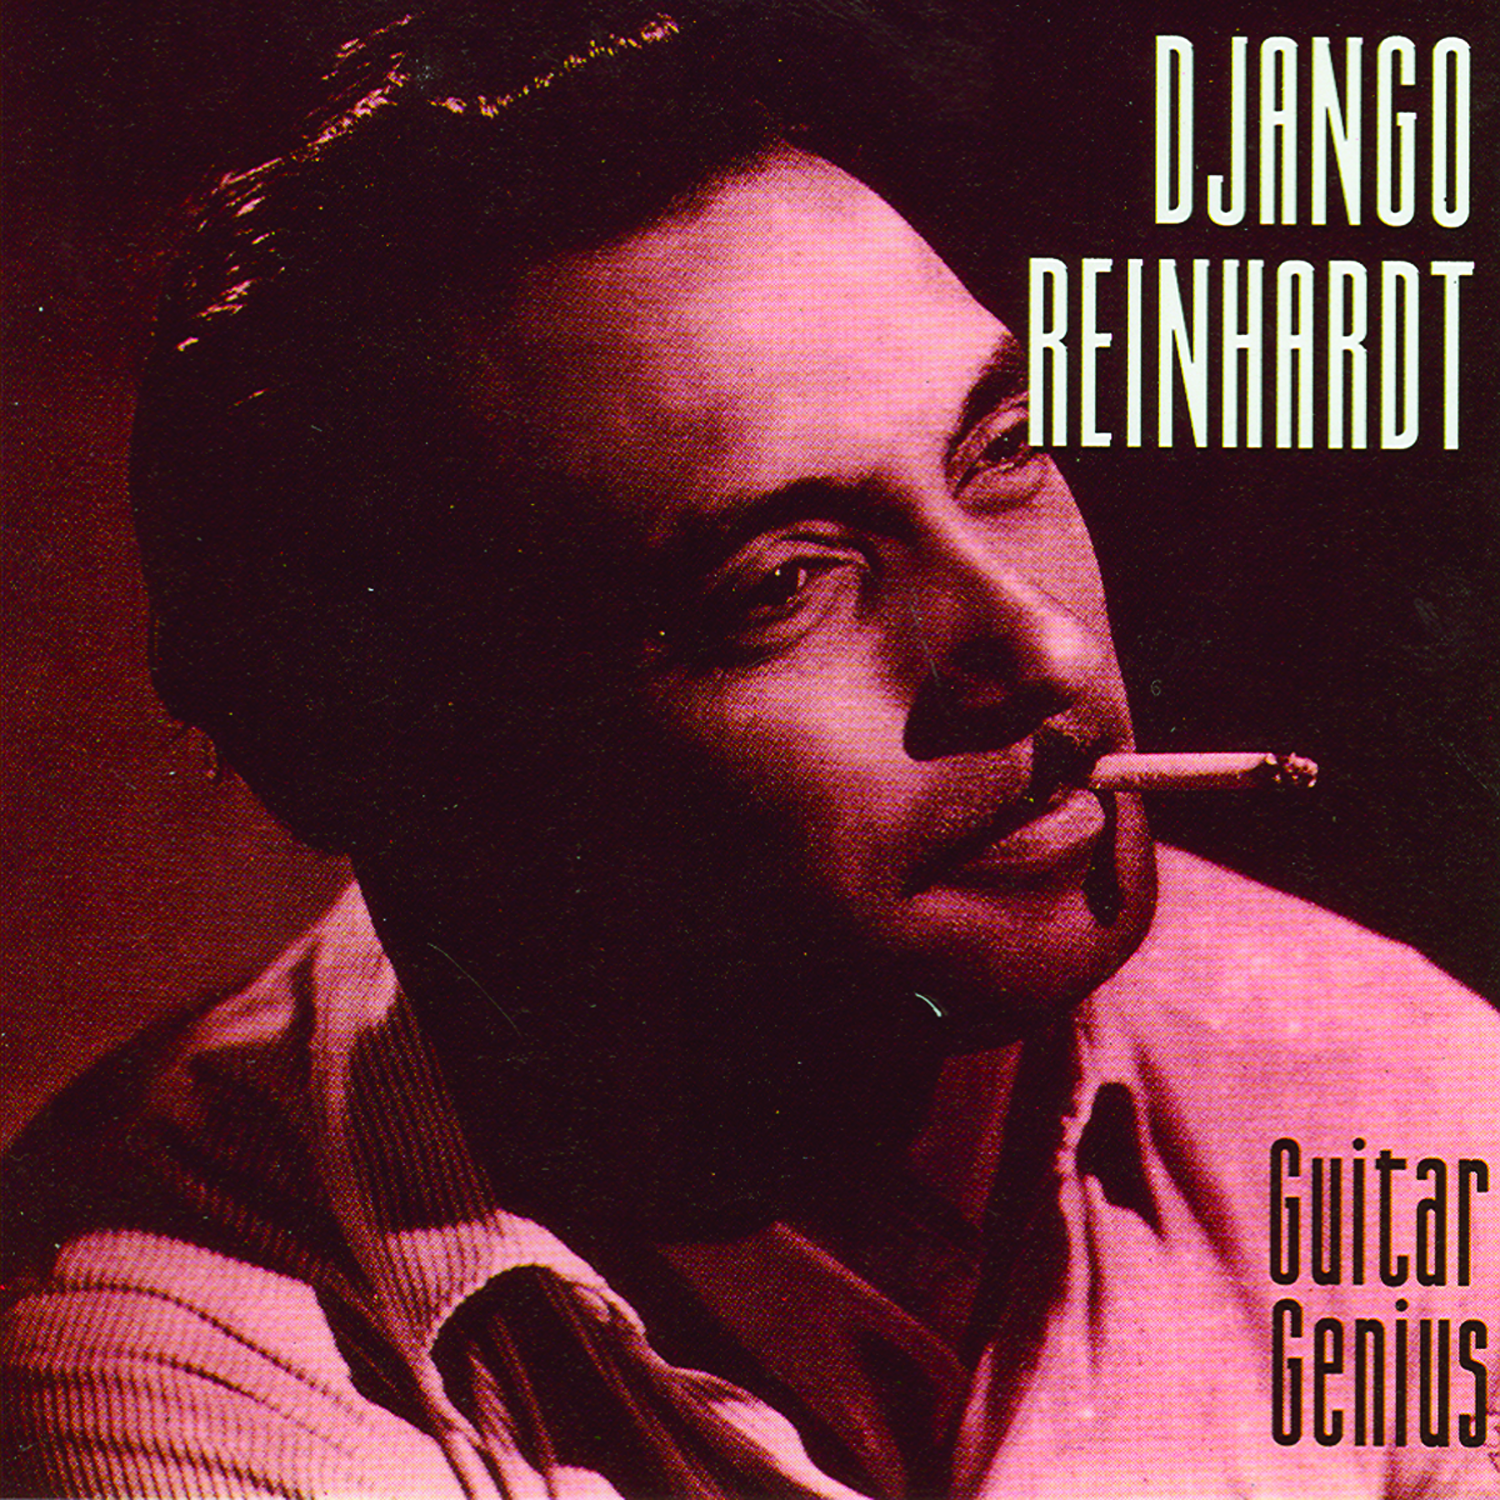 The Great Django Reinhardt